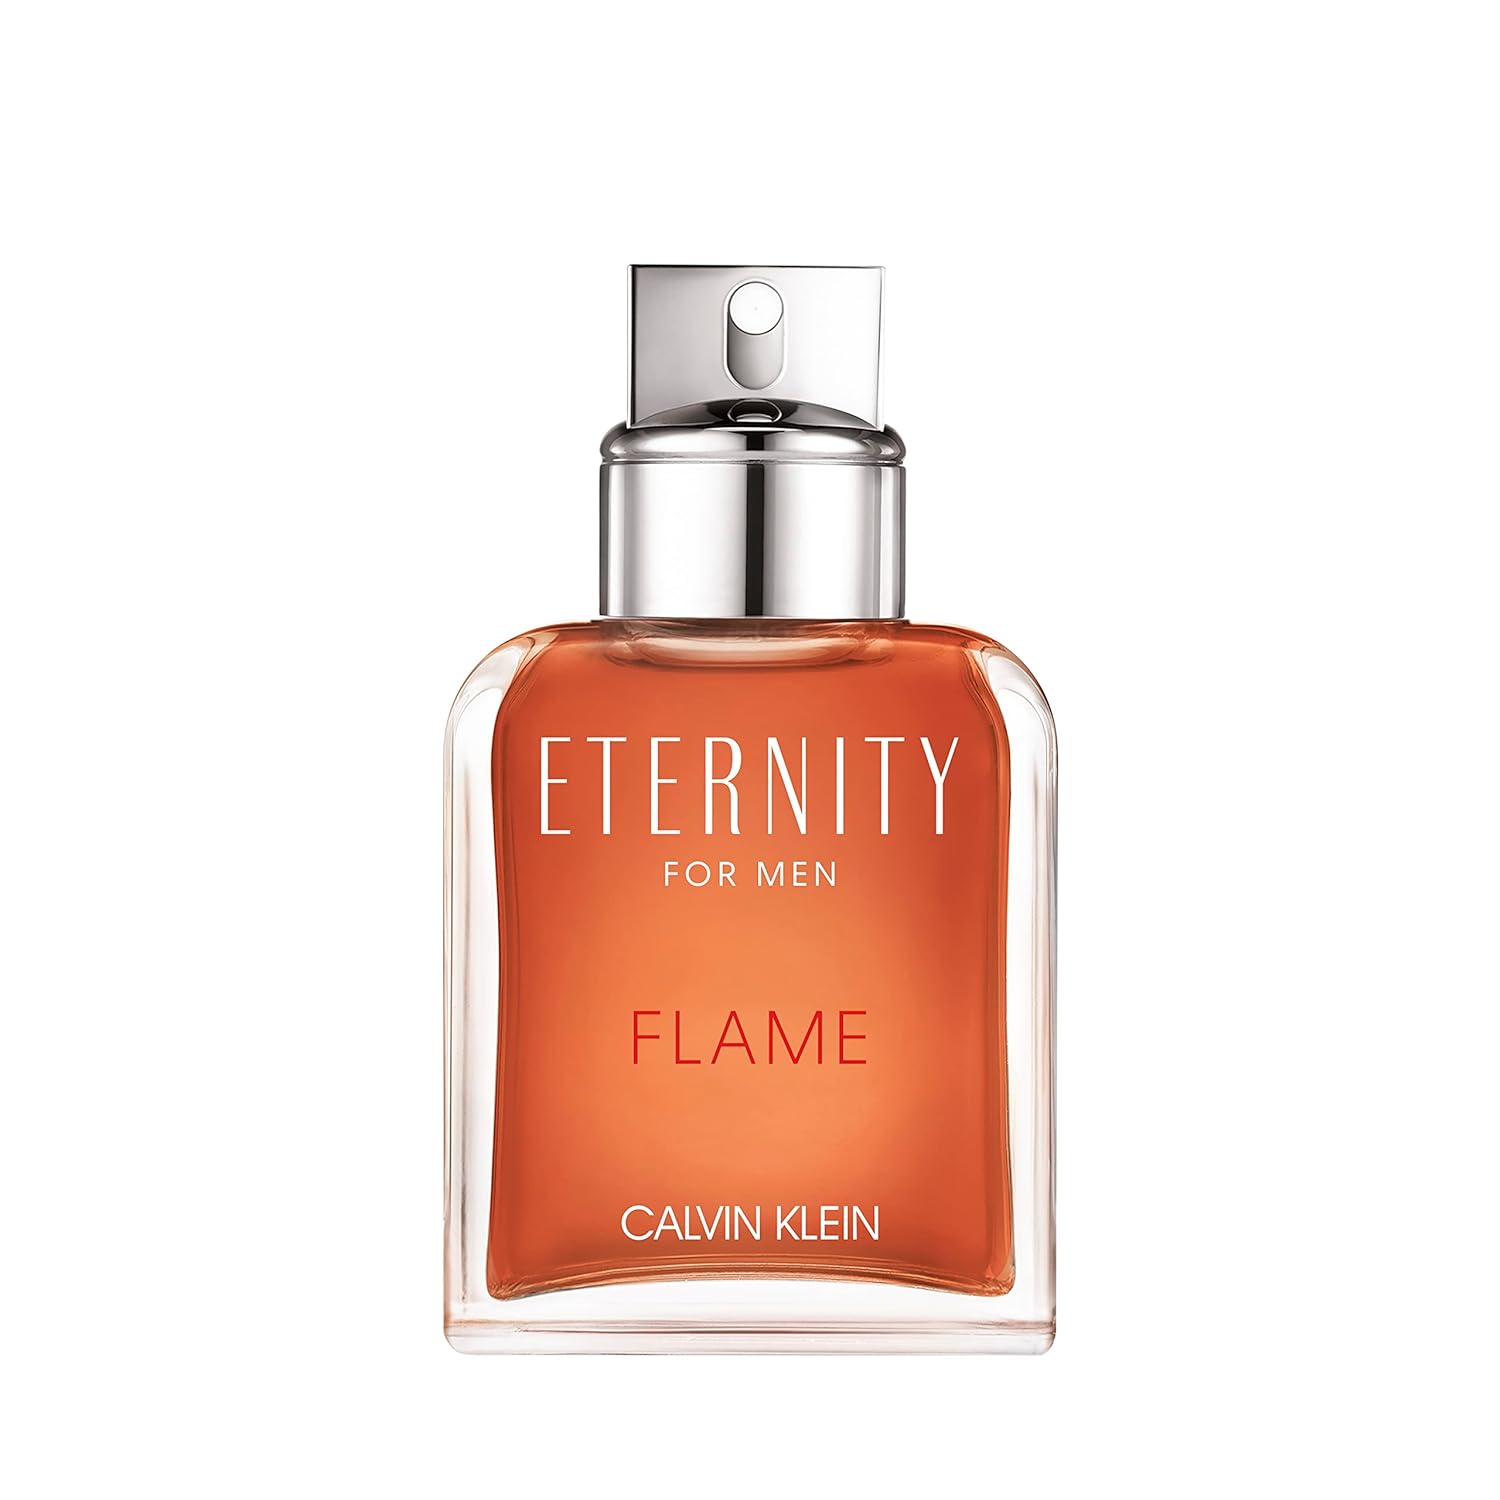 Calvin Klein Eternity Flame 100 ml Eau De Toilette Spray for Men